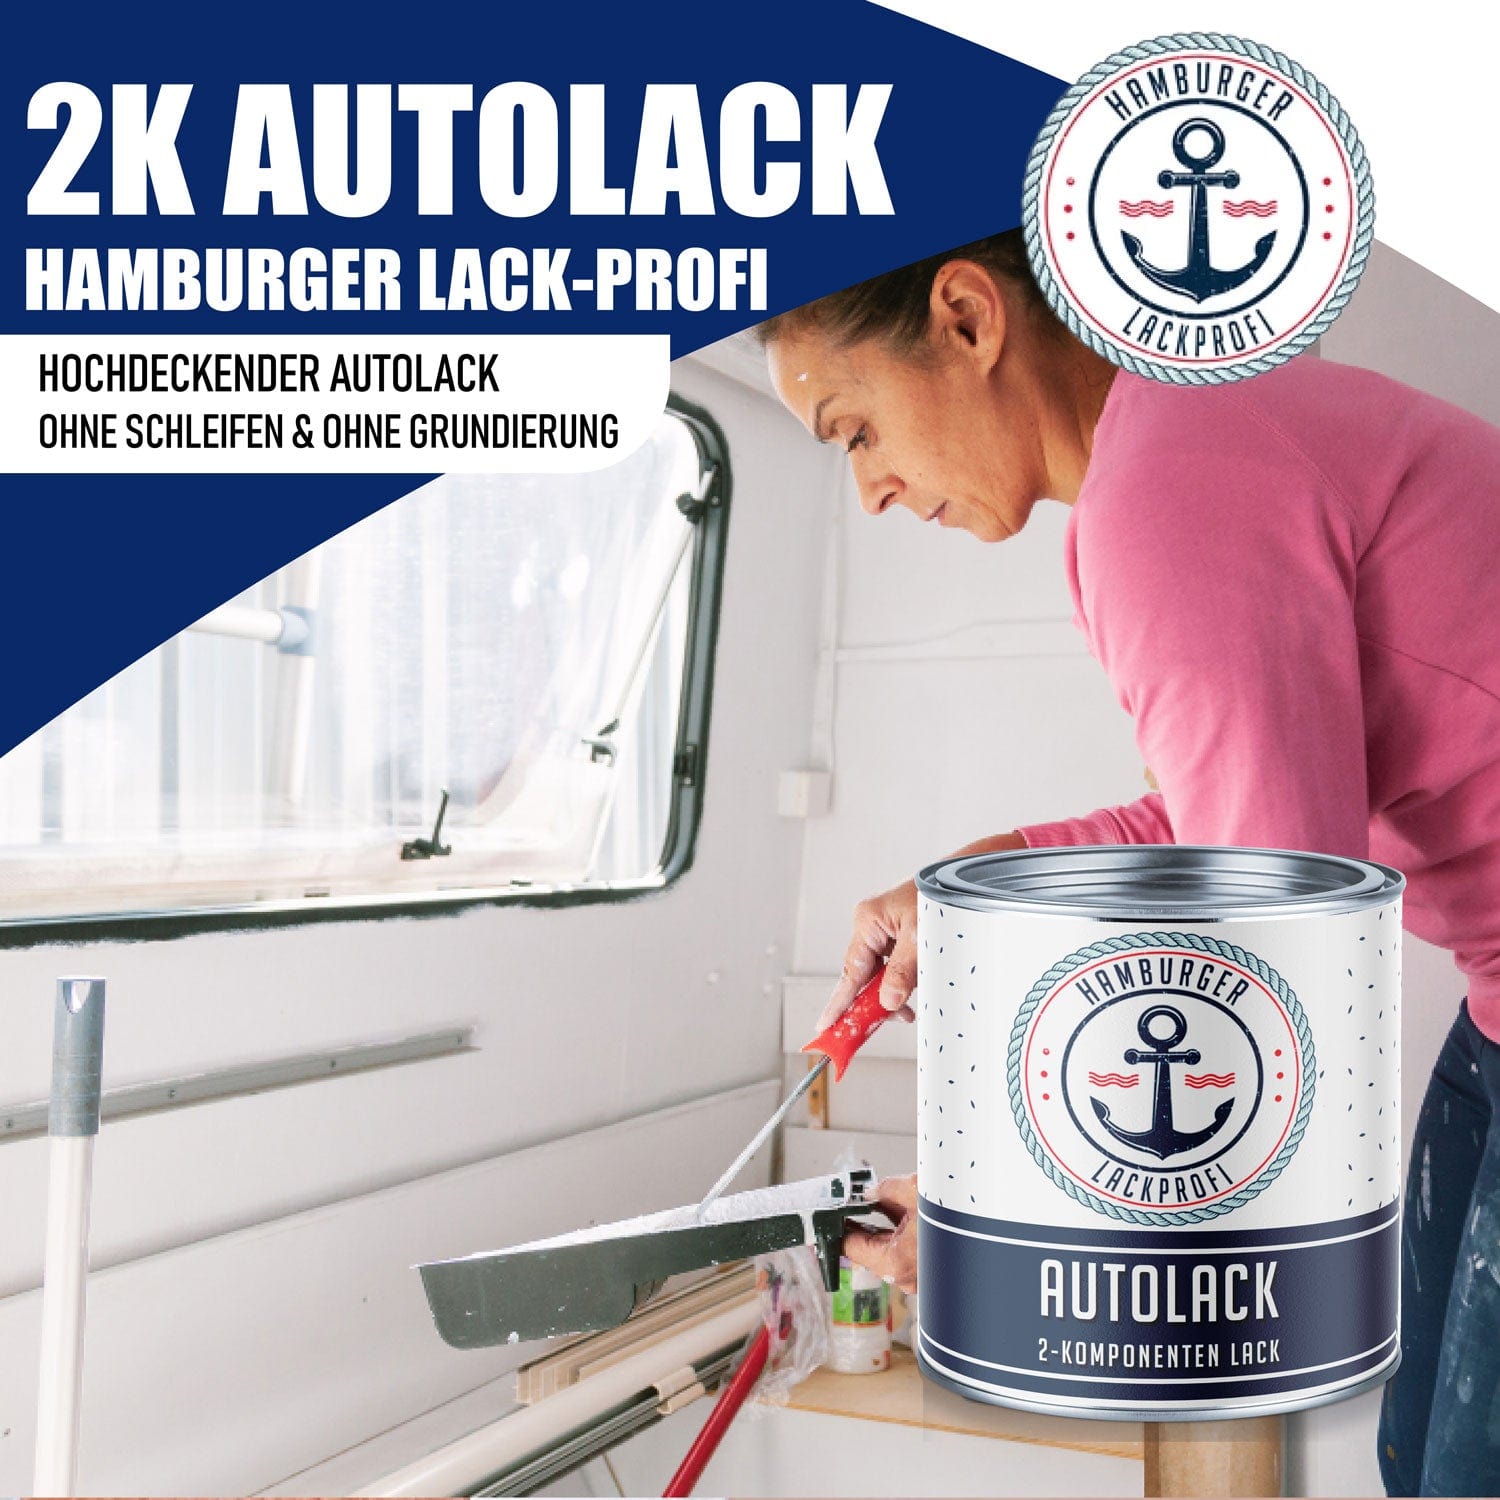 Hamburger Lack-Profi Lacke & Beschichtungen Hamburger Lack-Profi 2K Autolack in Signalorange RAL 2010 mit Lackierset (X300) & Verdünnung (1 L) - 30% Sparangebot